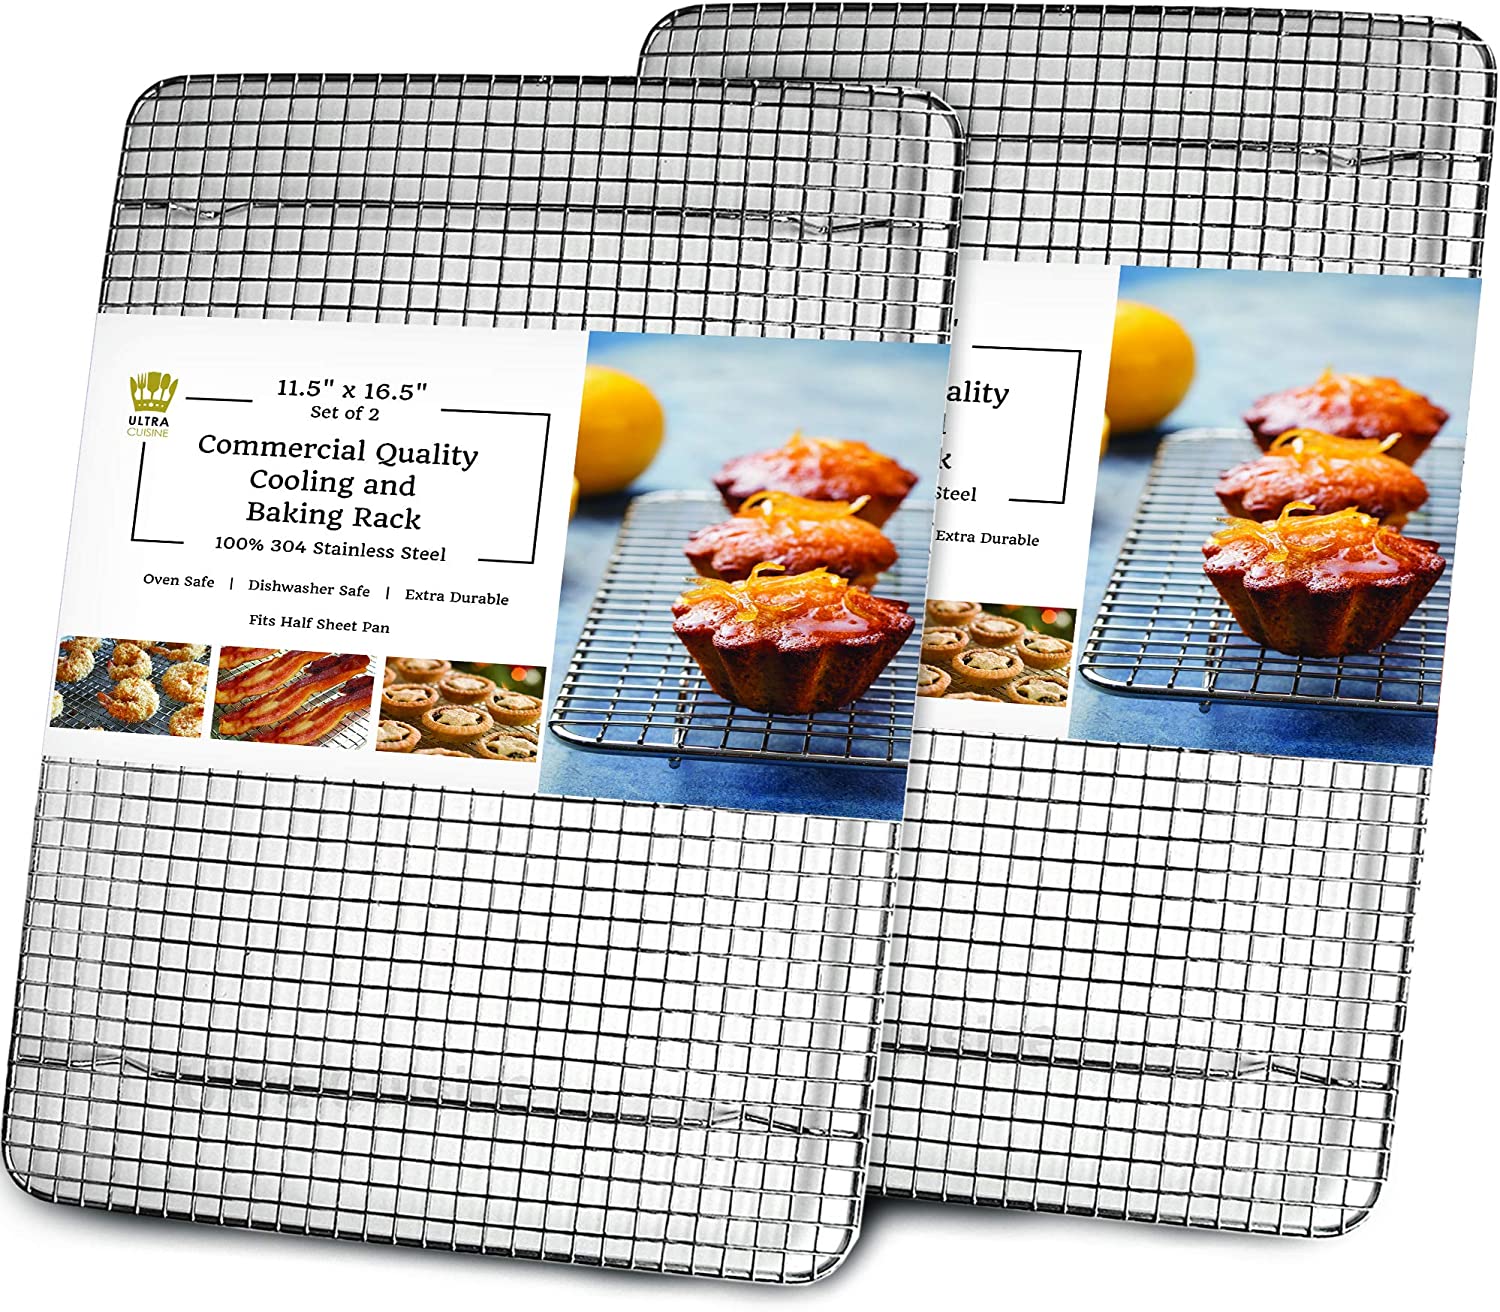 Kitchenatics Half Size Baking Sheet and Cooling Rack Set